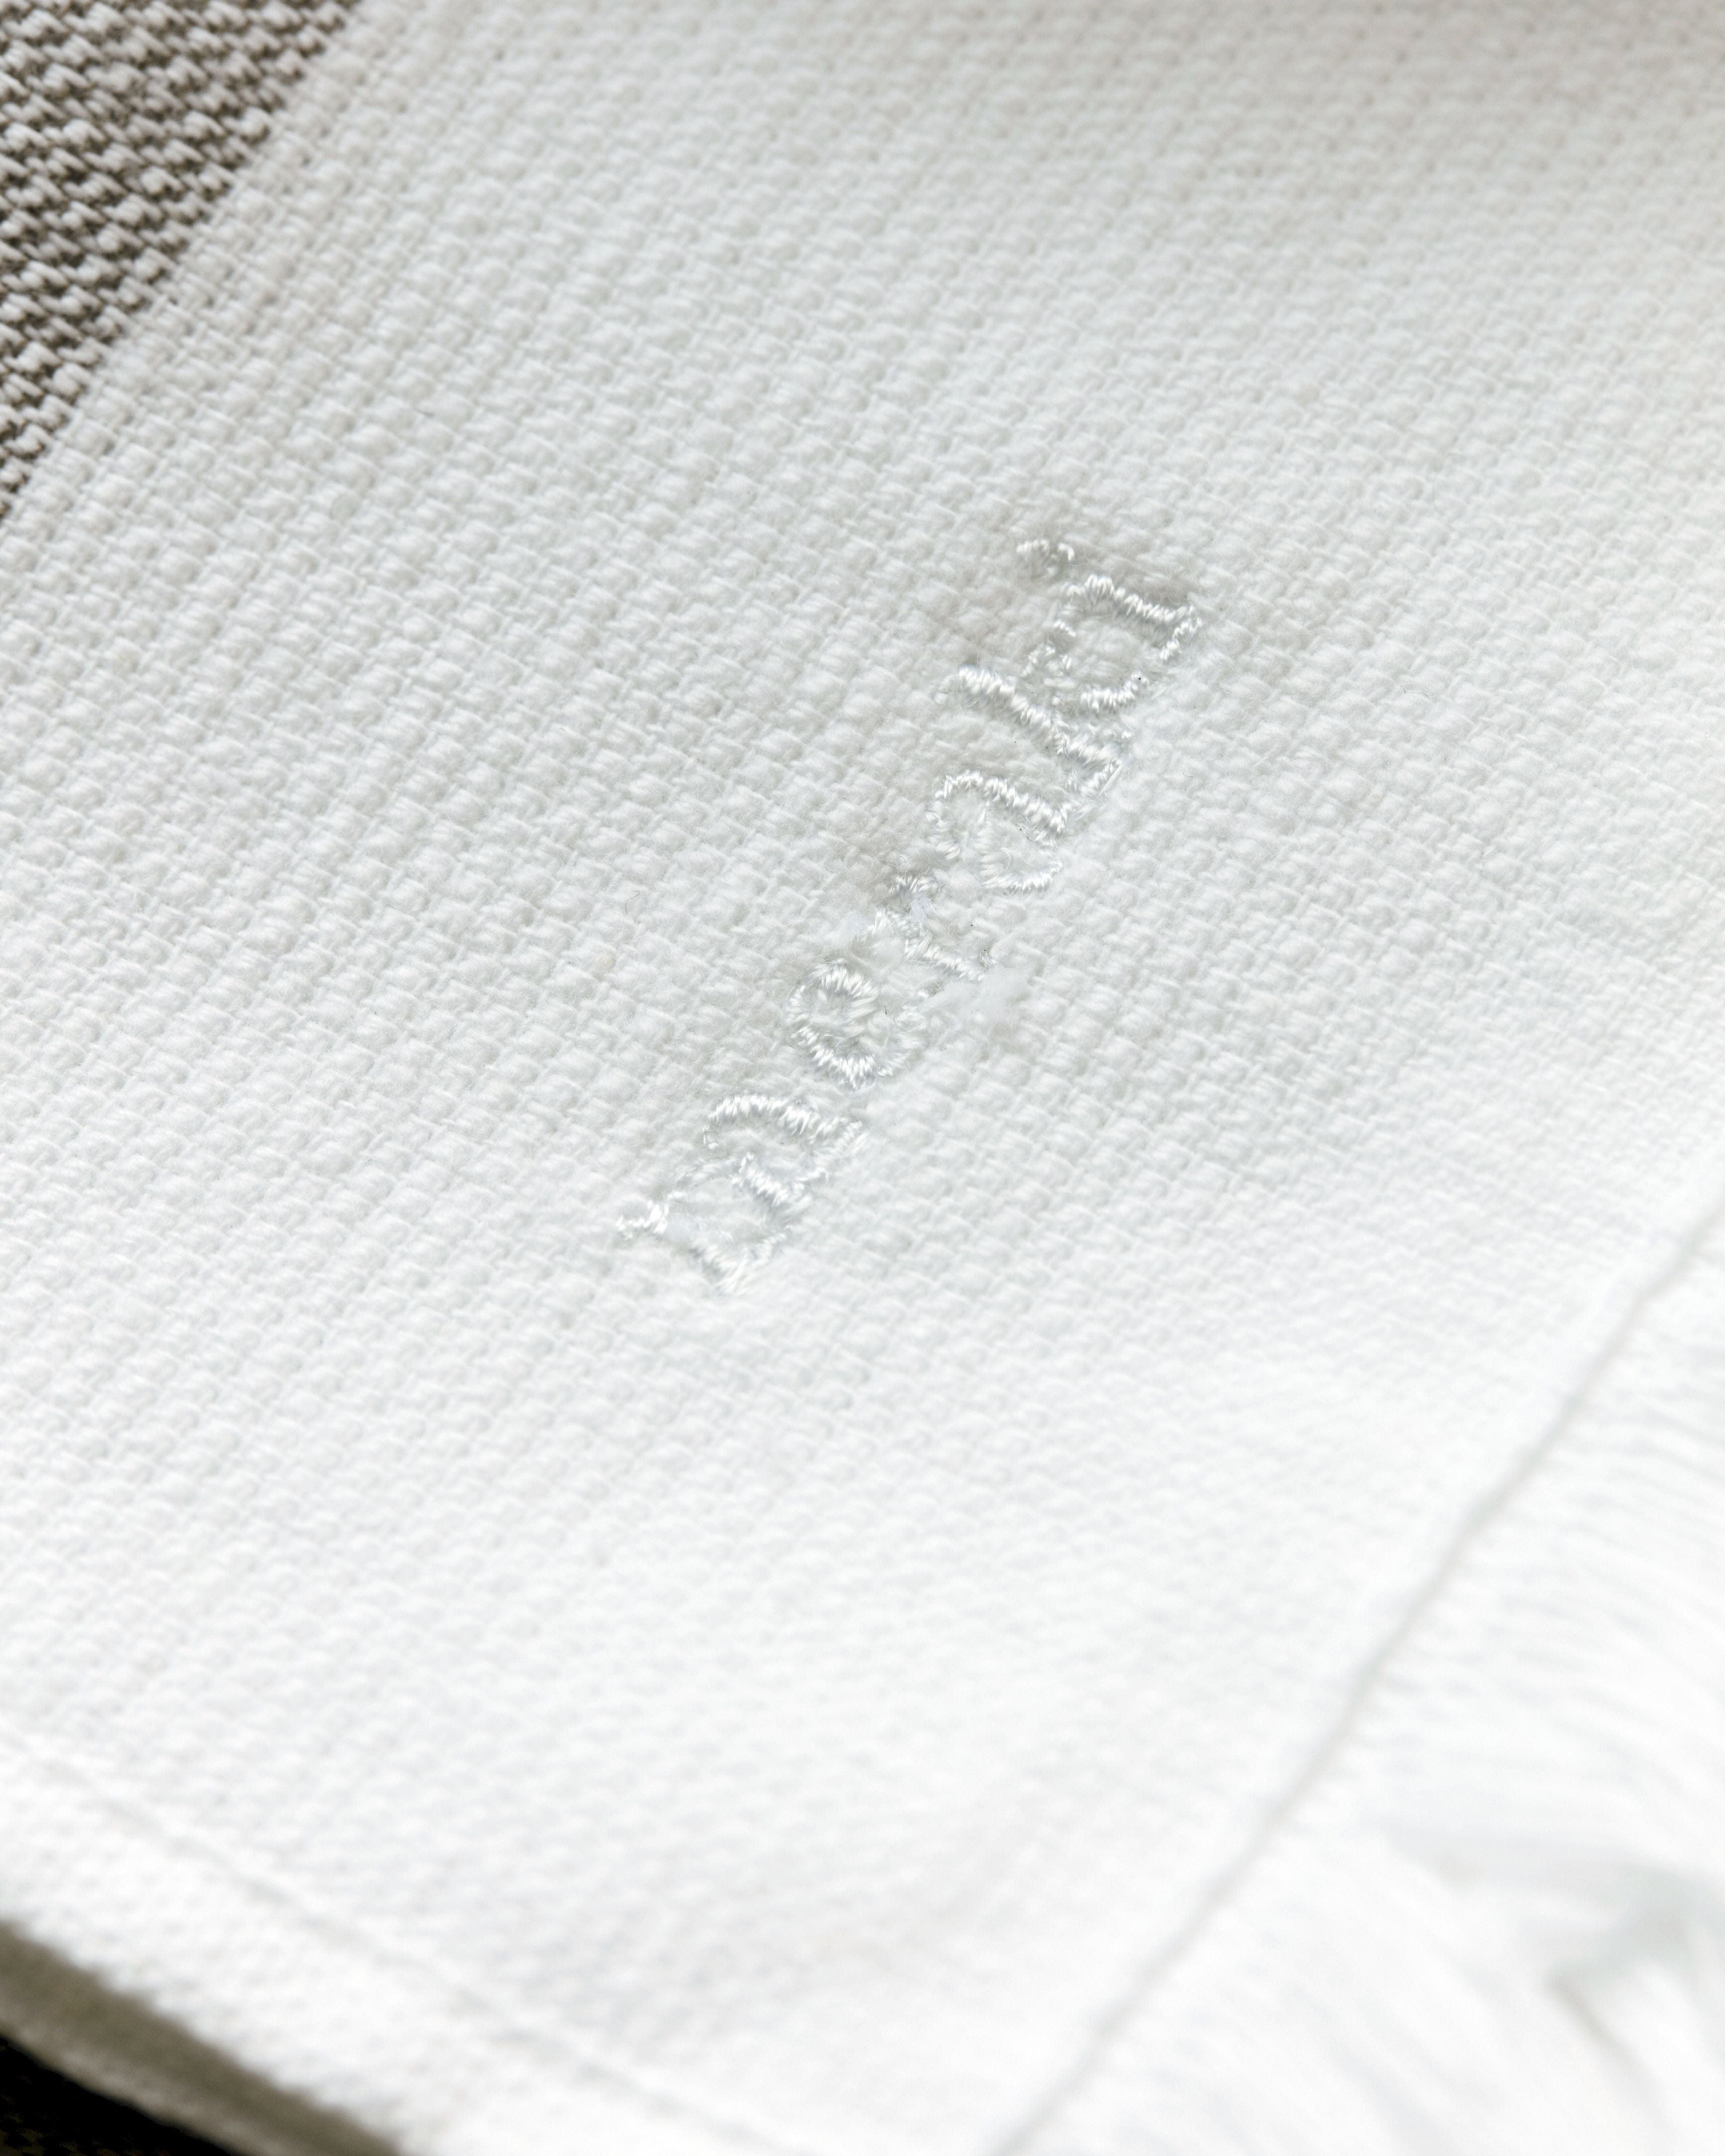 Meraki Barbarum Håndklæde 2 Stk. 50x100 Cm, Hvide Og Brune Striber